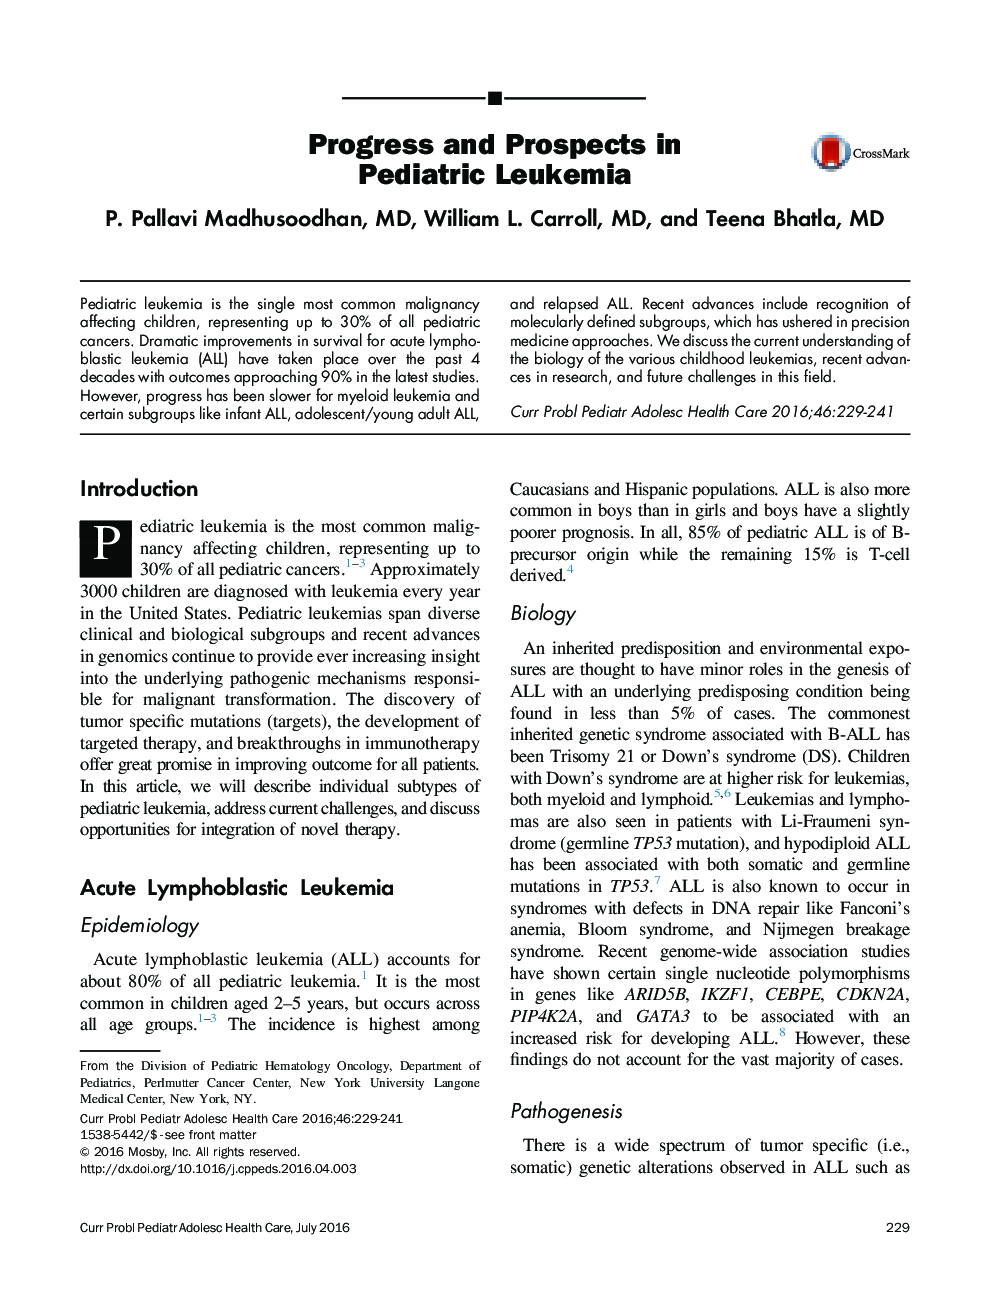 Progress and Prospects in Pediatric Leukemia